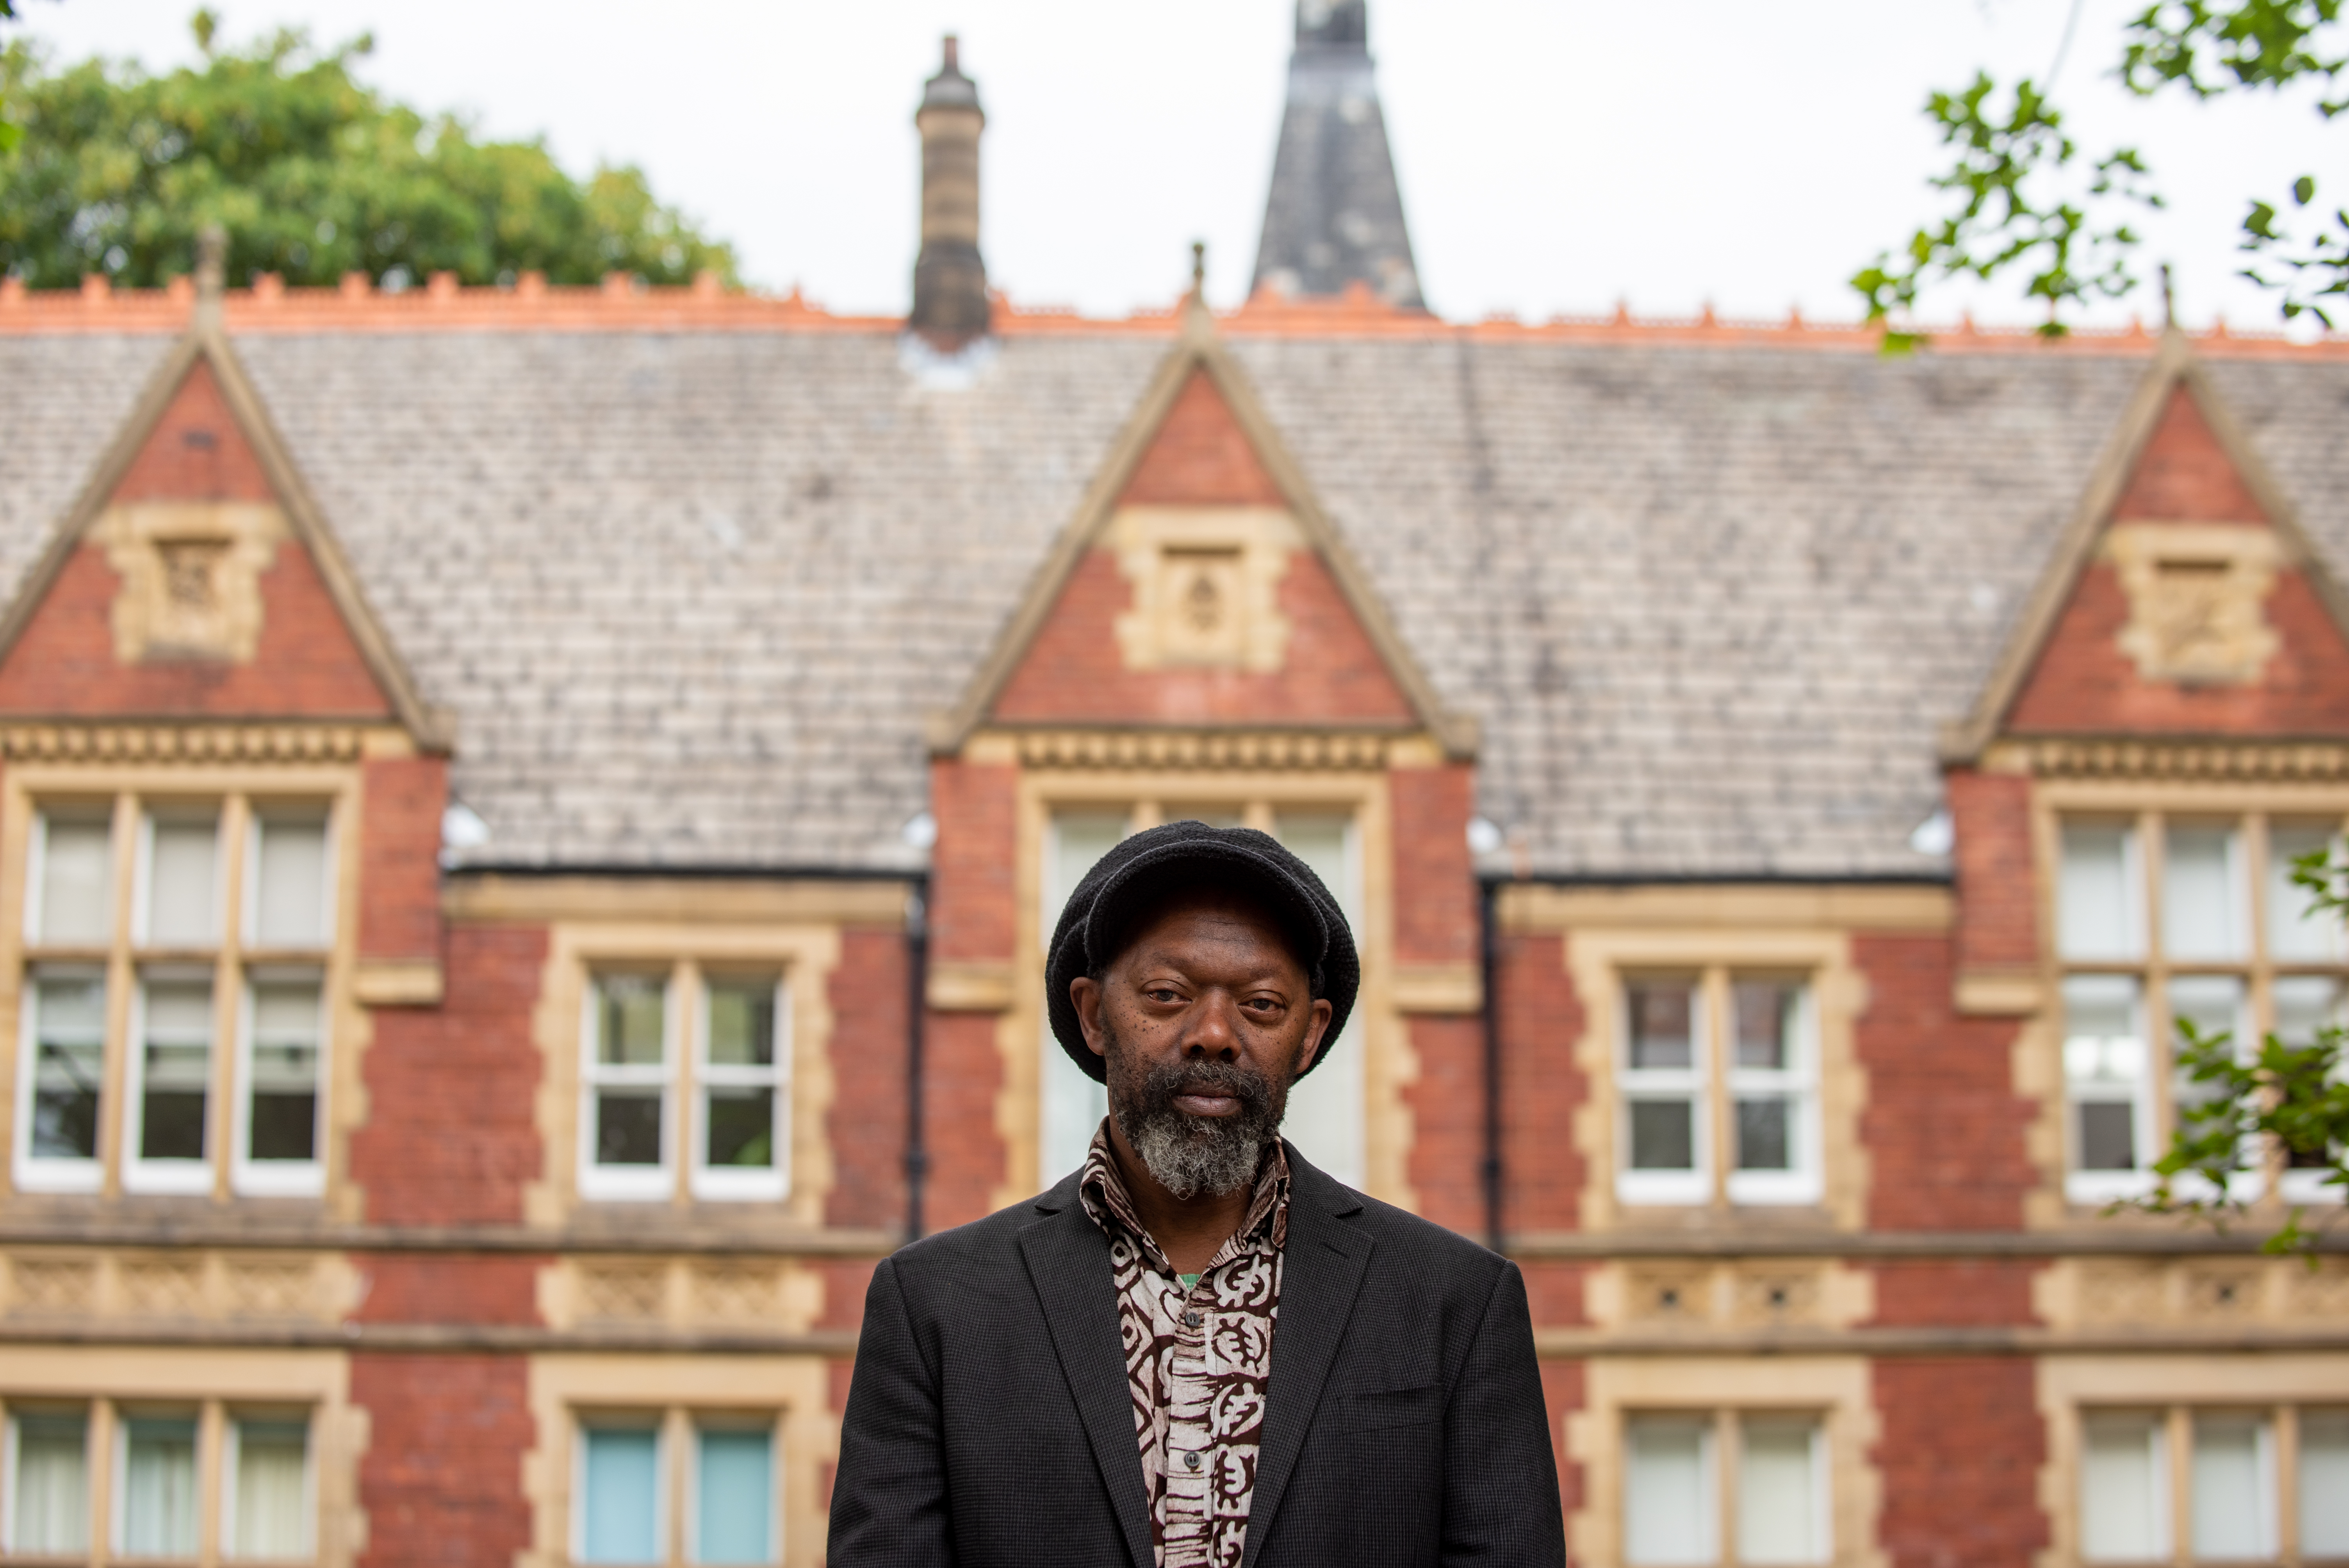 Joe Williams, founder and guide of the award-winning Leeds Black History Walk